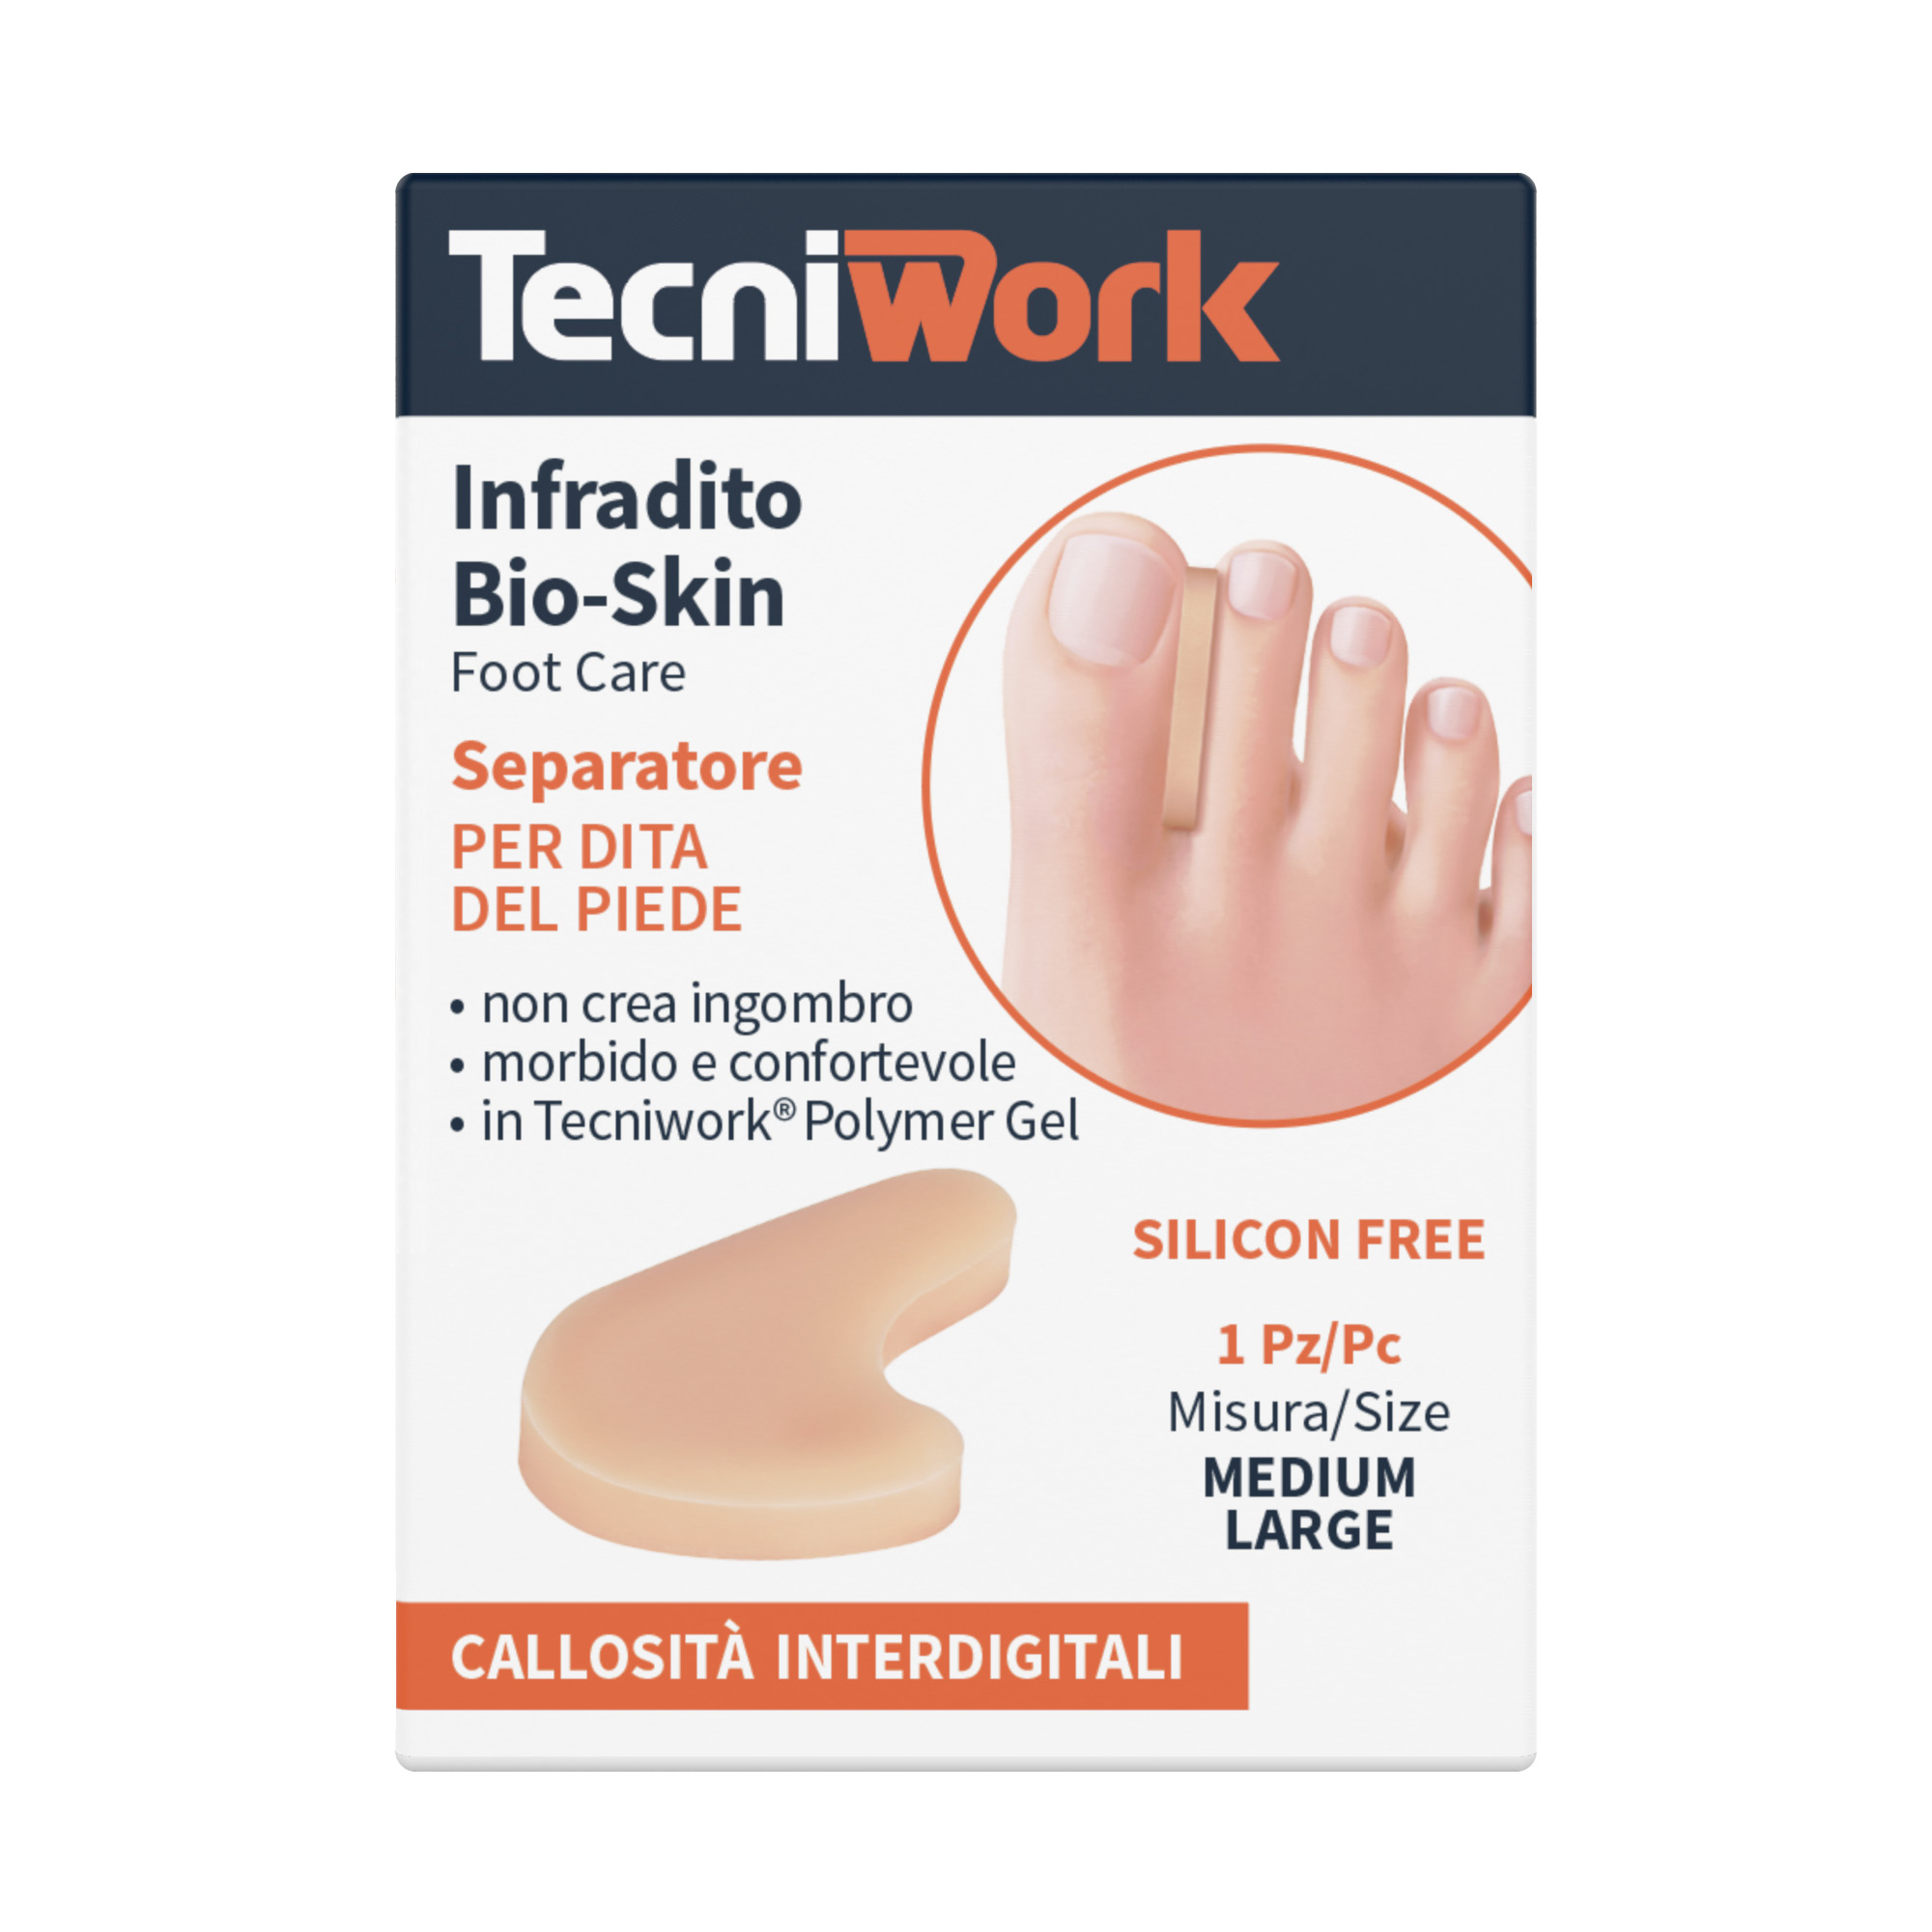 Infradito per dita dei piedi in Tecniwork Polymer Gel color pelle Bio-Skin 1 pz